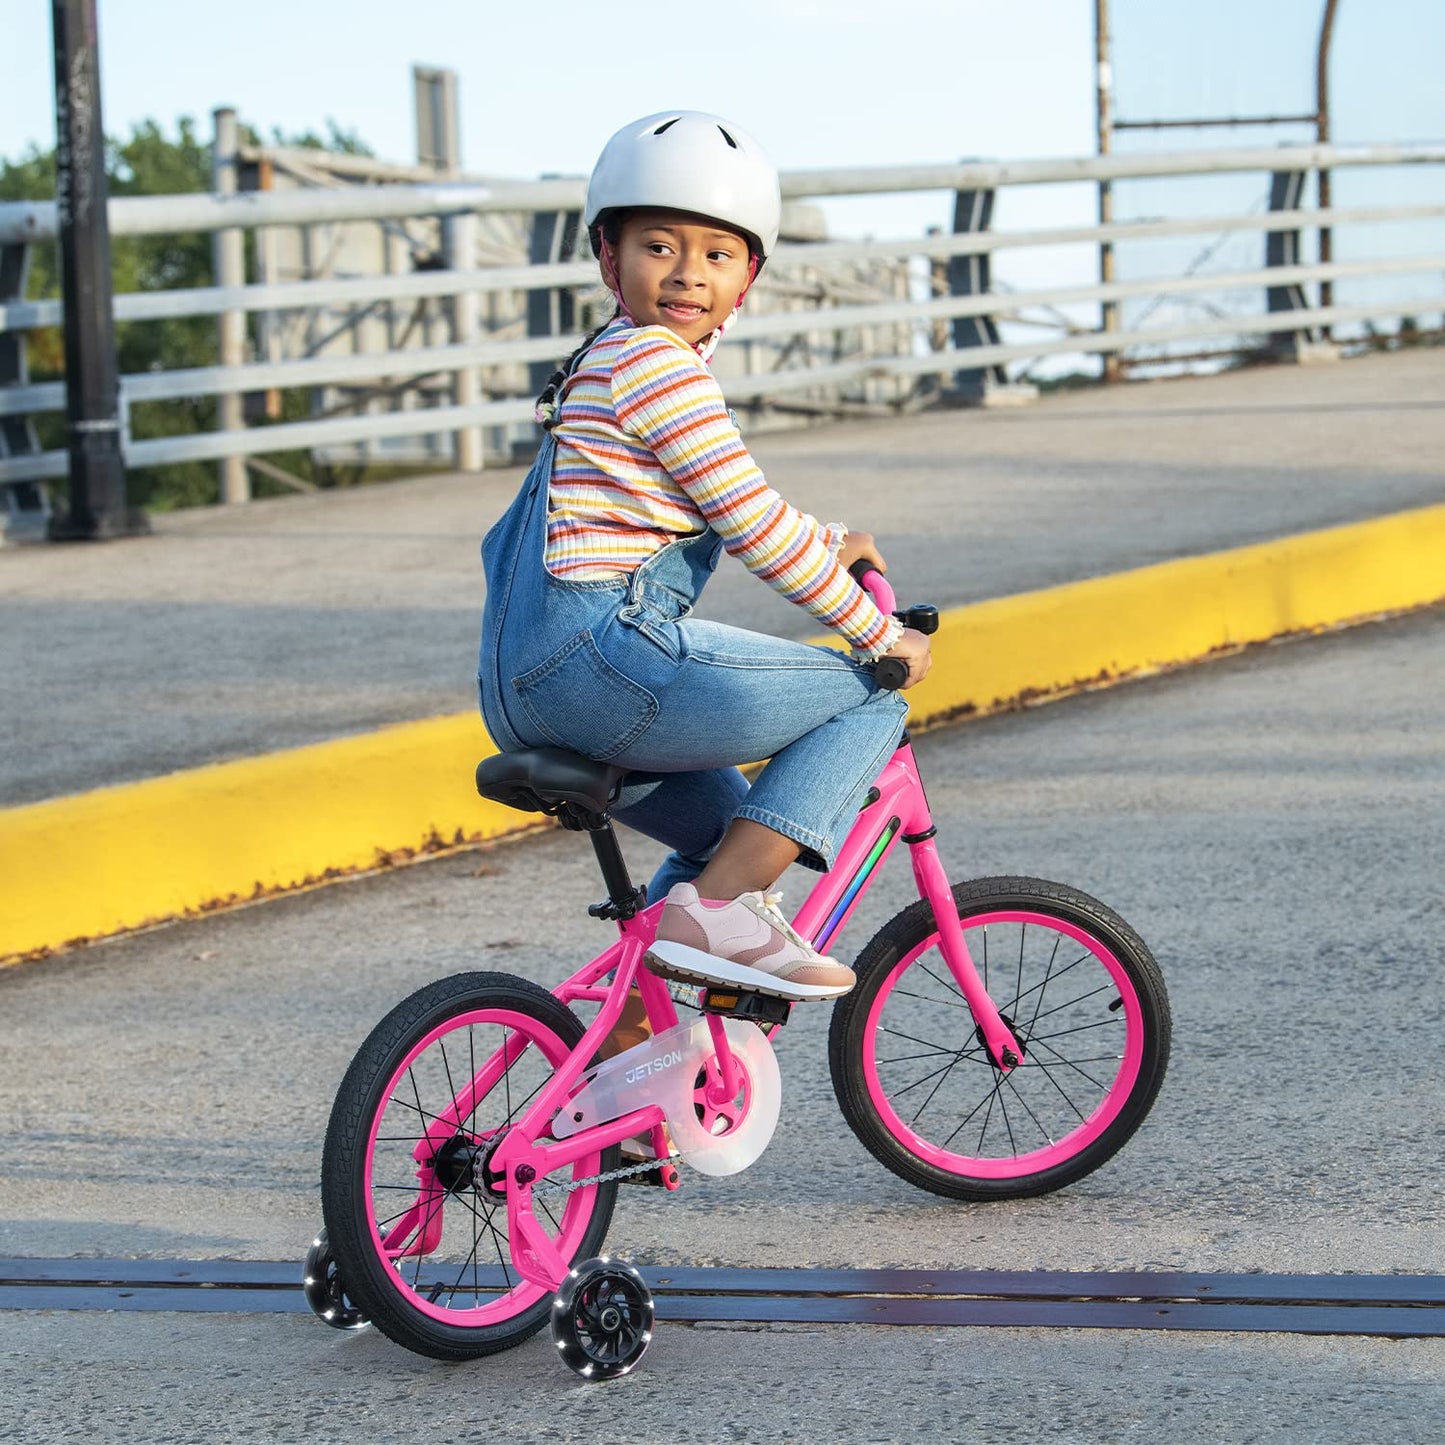 Jetson Light Rider M 16” Wheels Kids’ Light-up Unisex Bike, Ages 3+, Includes Light-up Frame and Light-up Training Wheels, Three Different Light Modes, Seven Color Options, Easily Adjustable Handlebar